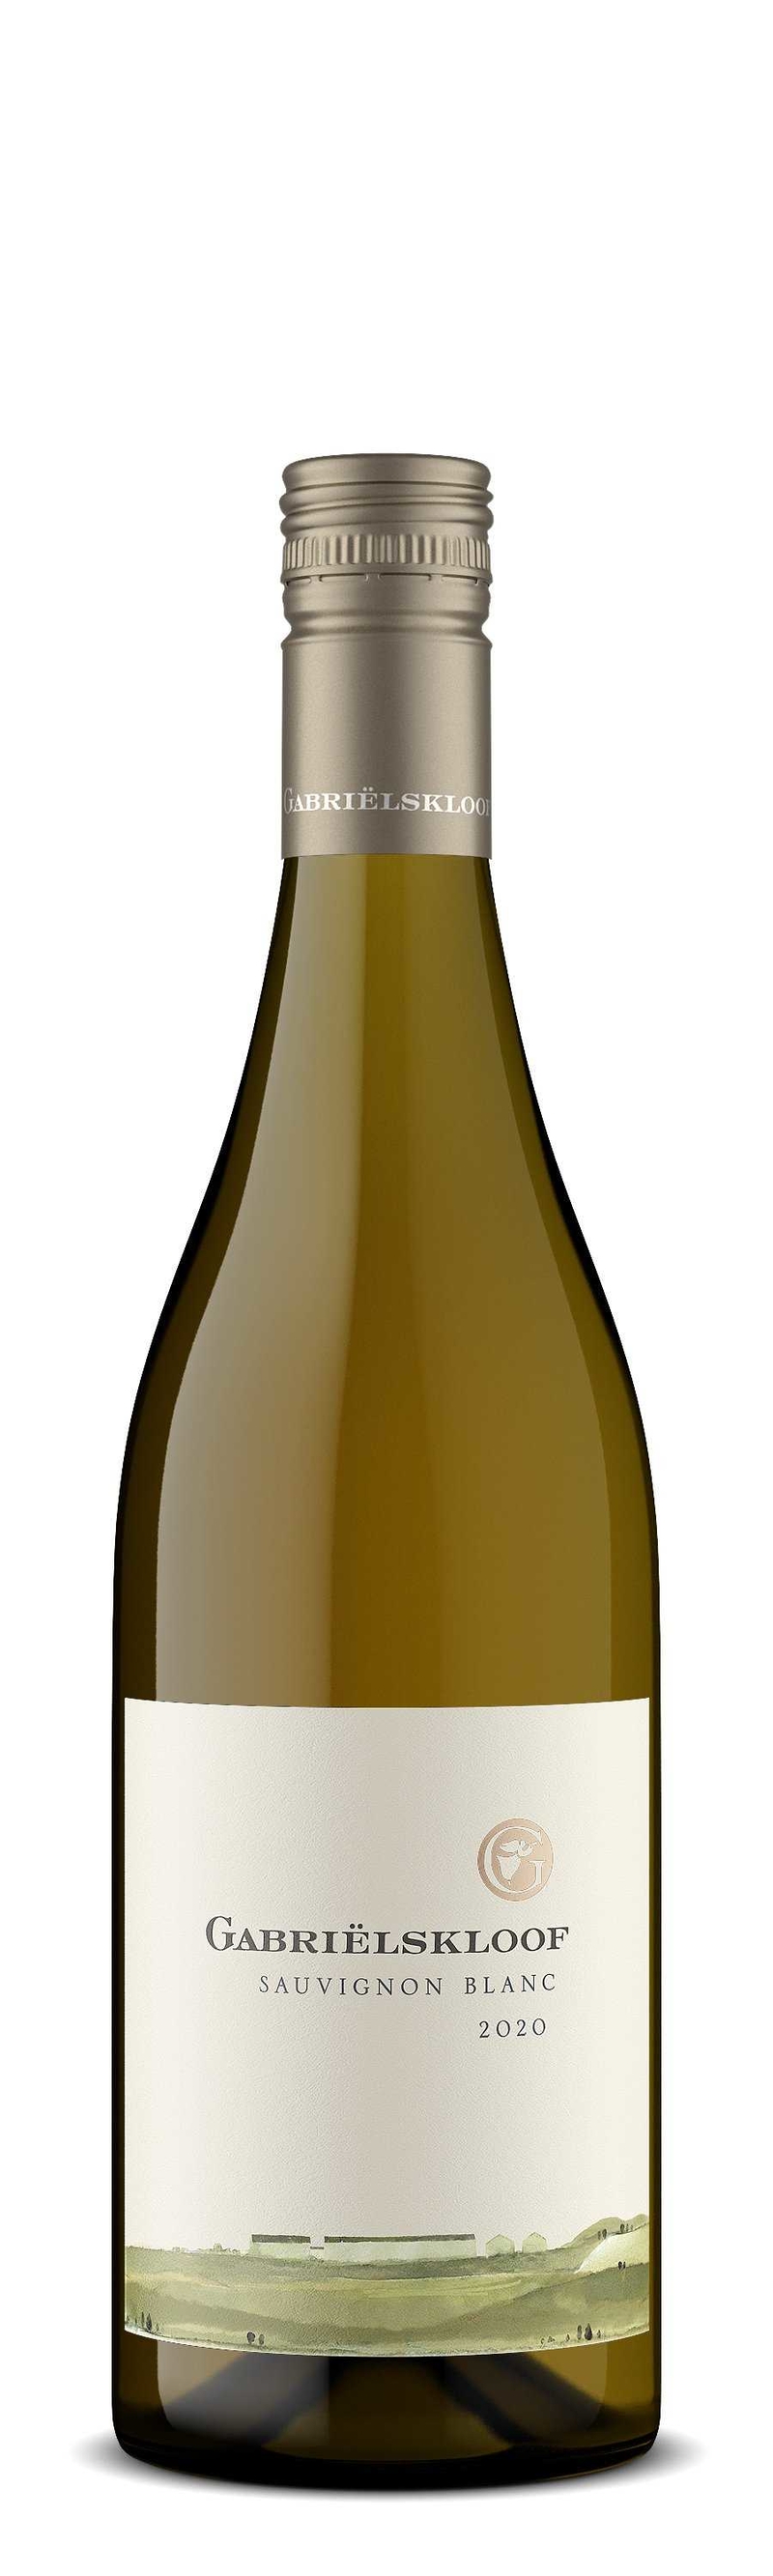 GABRIËLSKLOOF Sauvignon Blanc 2020